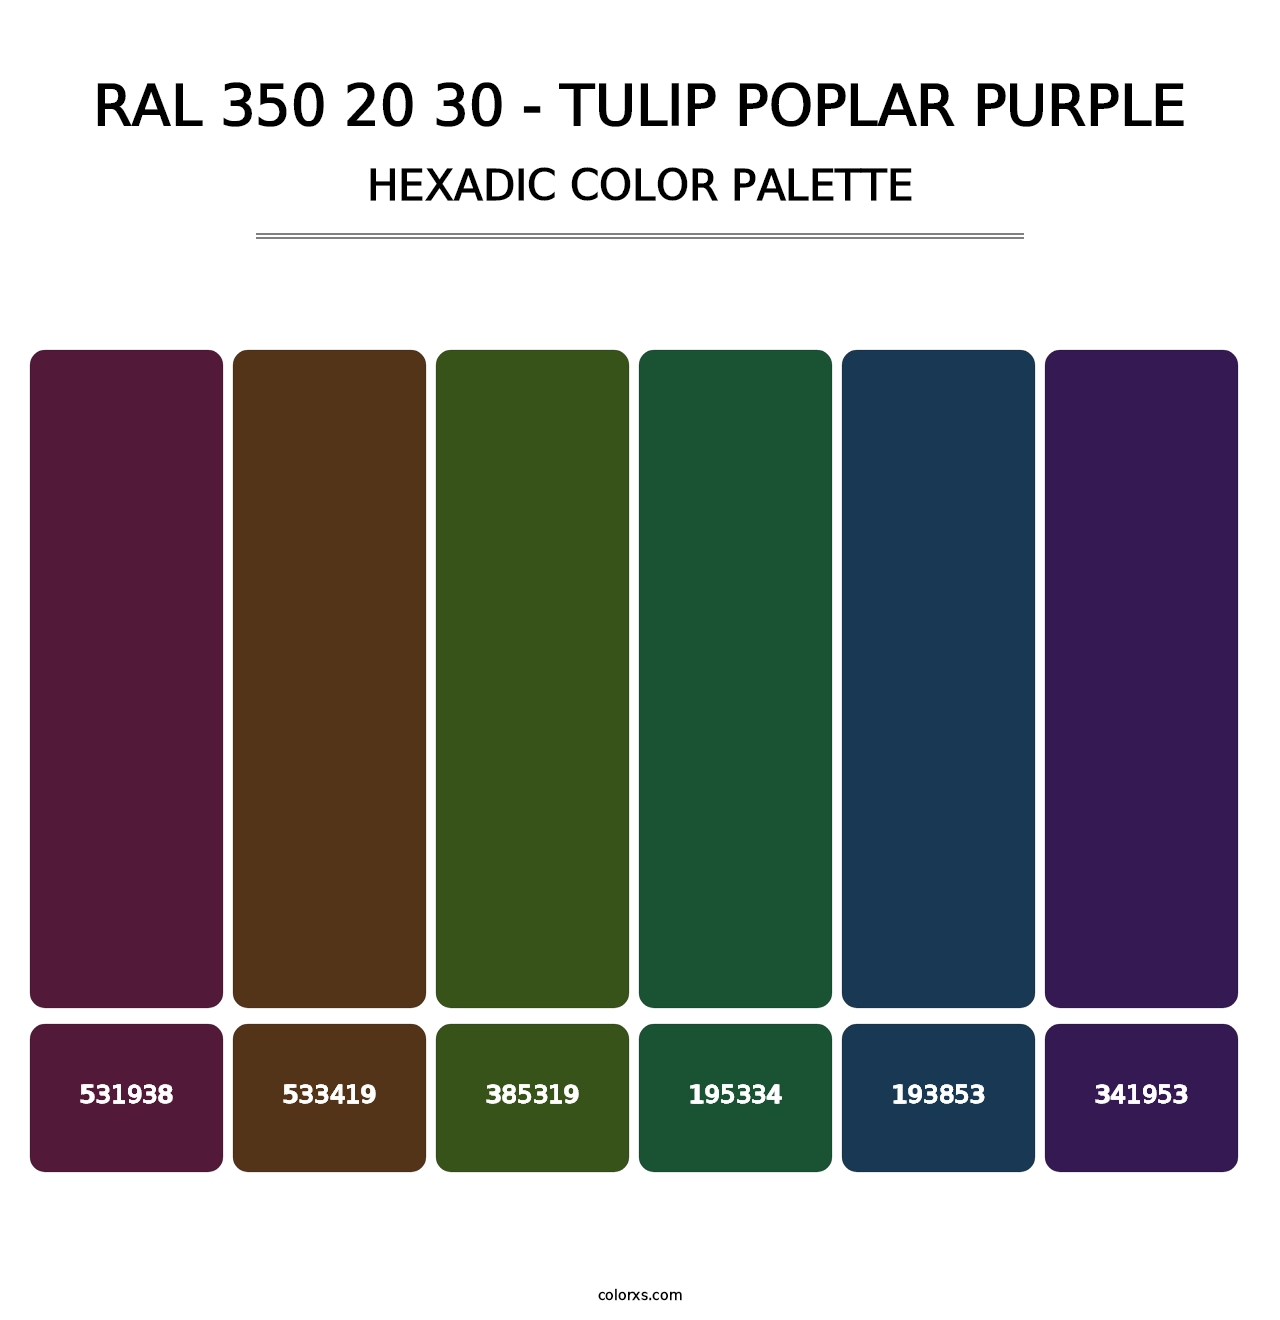 RAL 350 20 30 - Tulip Poplar Purple - Hexadic Color Palette